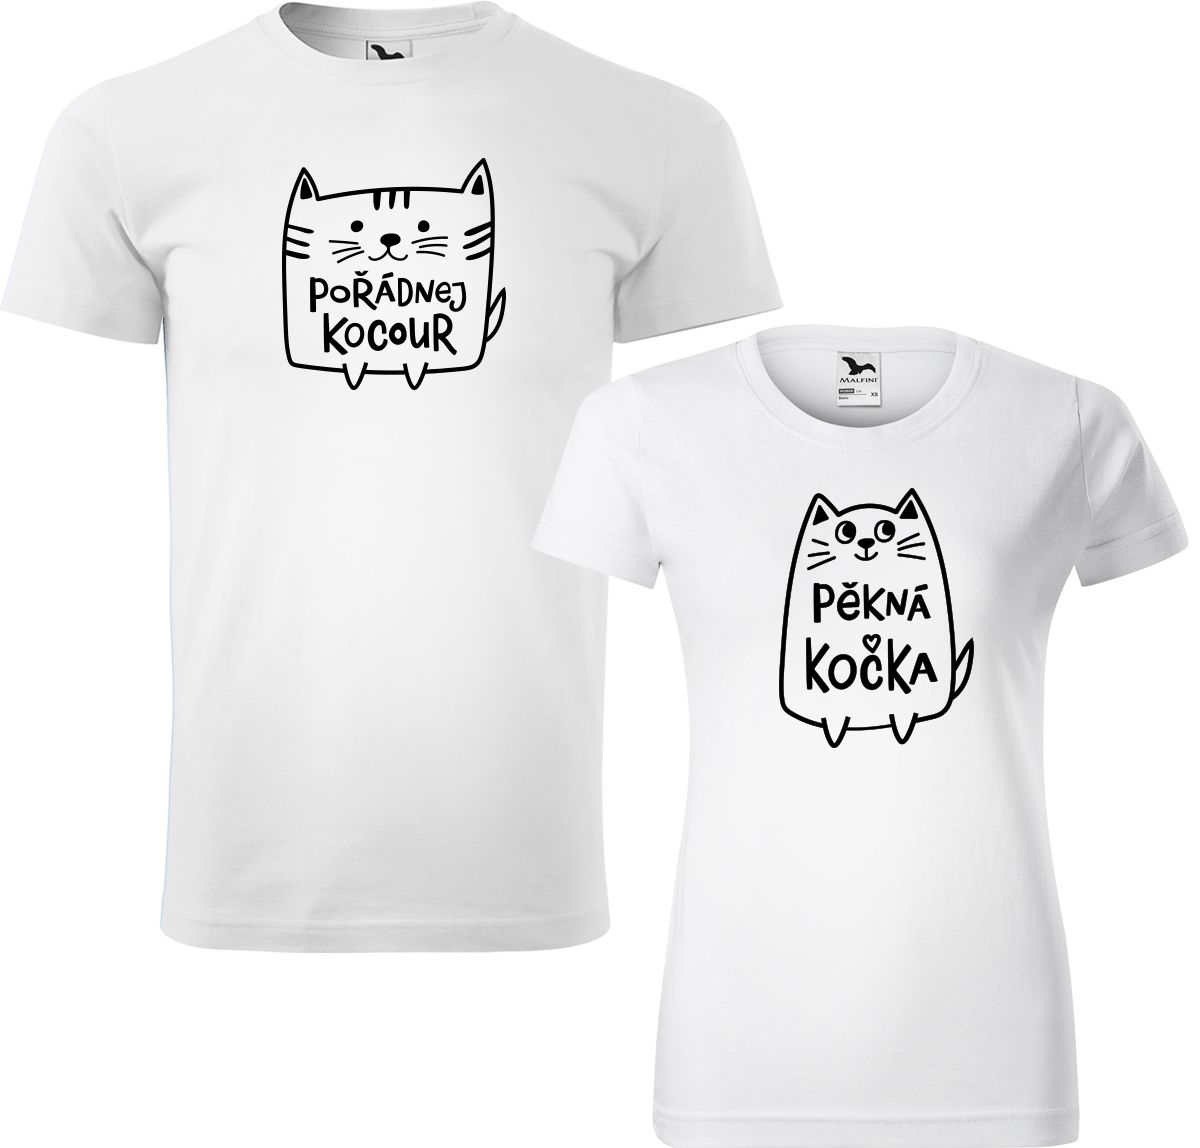 Trička pro páry - Pořádnej kocour a pěkná kočka Barva: Bílá (00), Velikost dámské tričko: 2XL, Velikost pánské tričko: 2XL